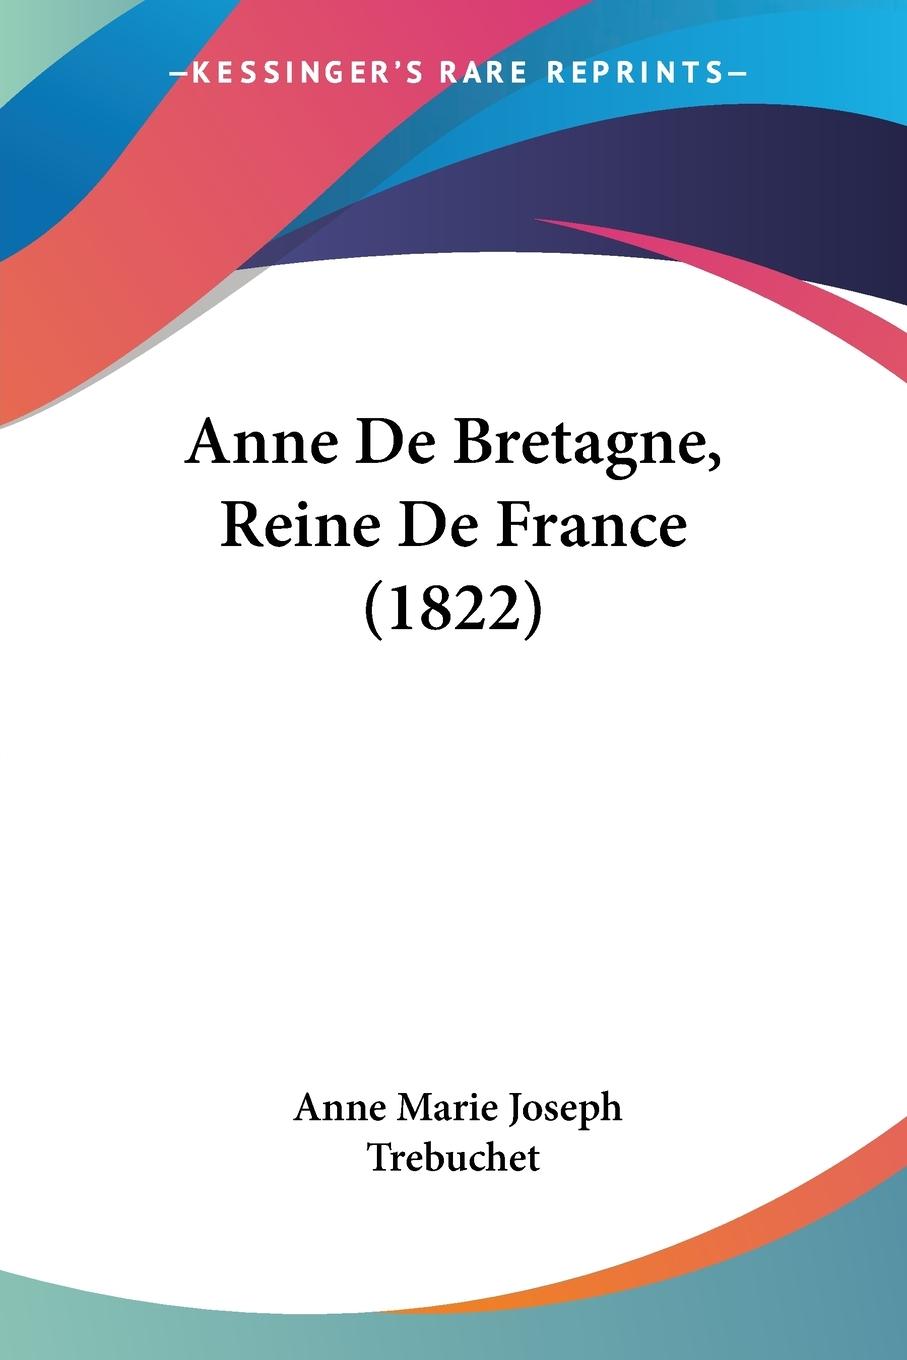 Anne De Bretagne, Reine De France (1822) - Trebuchet, Anne Marie Joseph